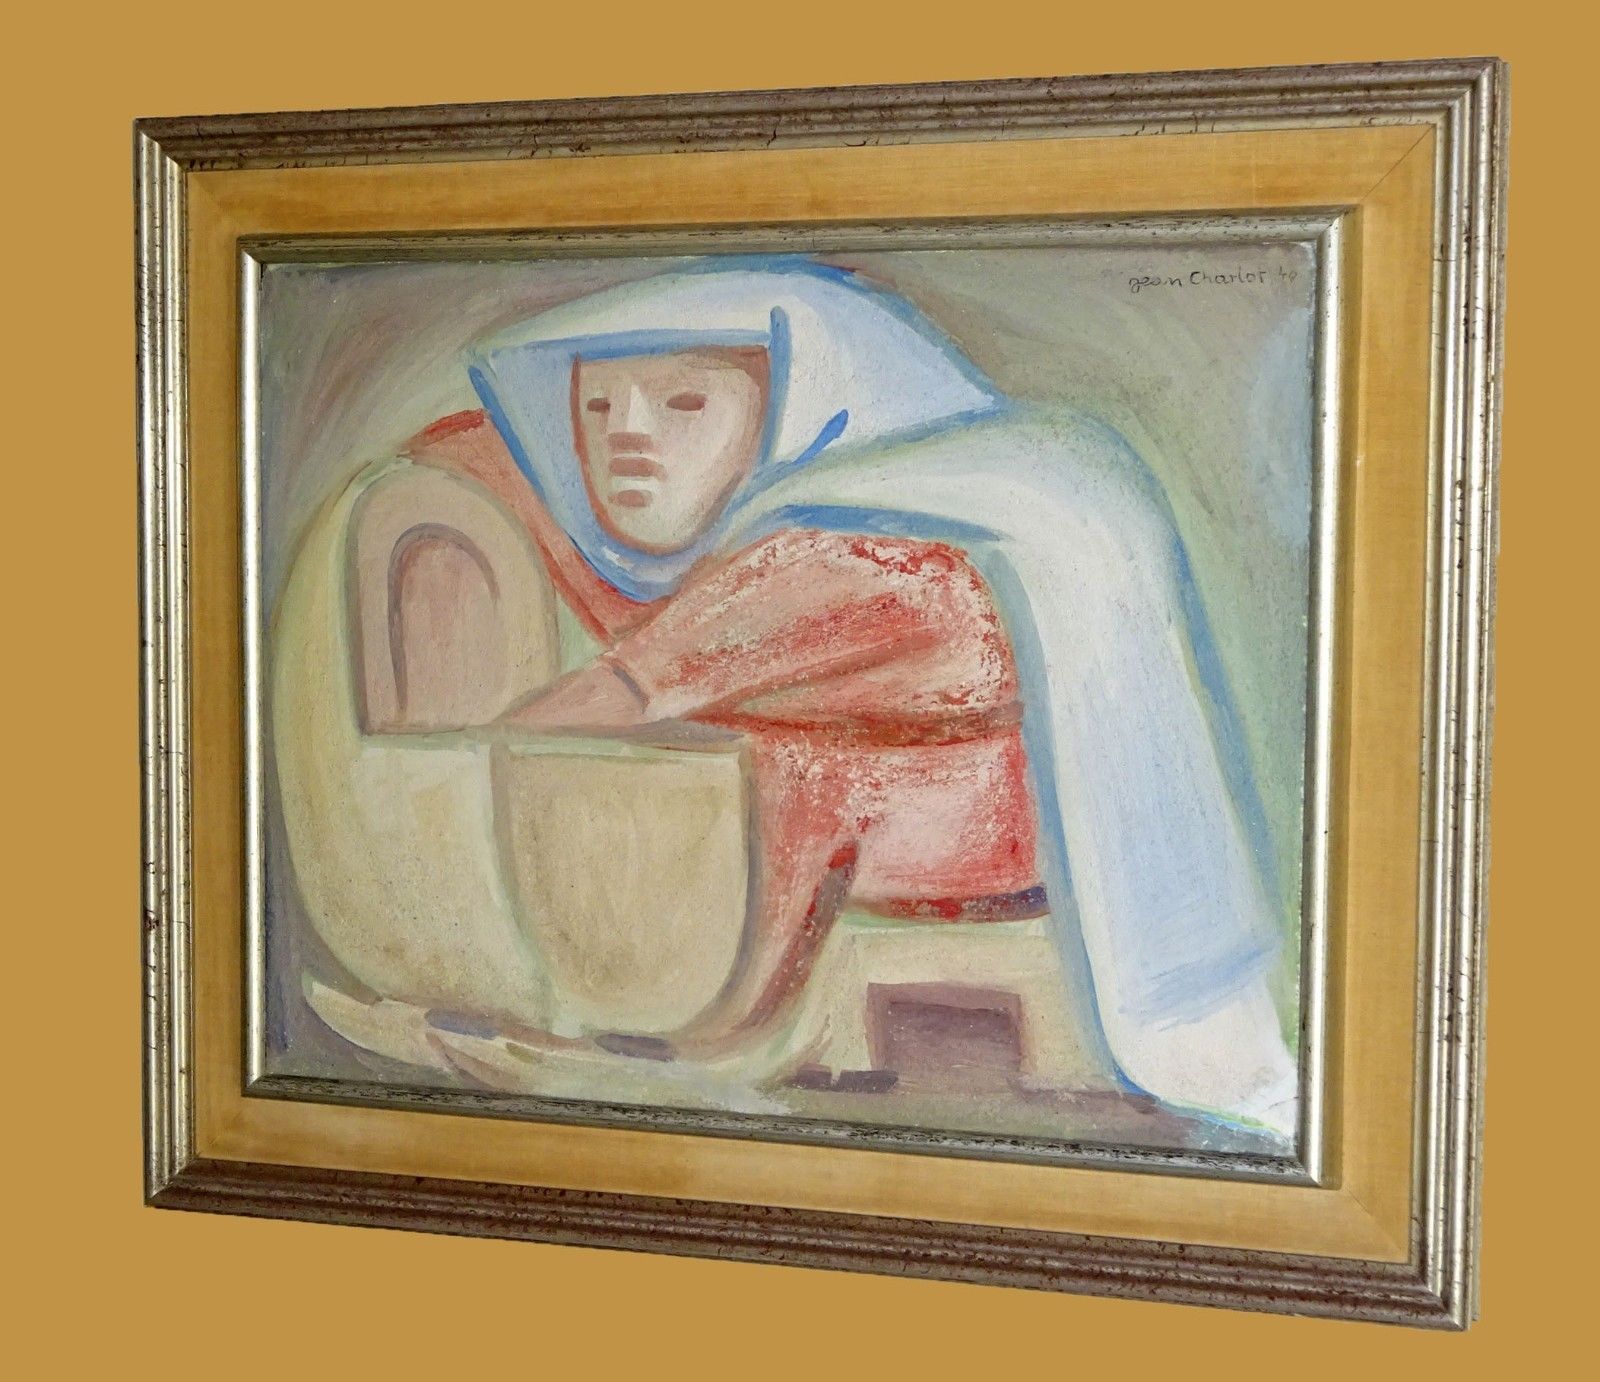 Fresco.  Woman with Cradle.  Jean Charlot.